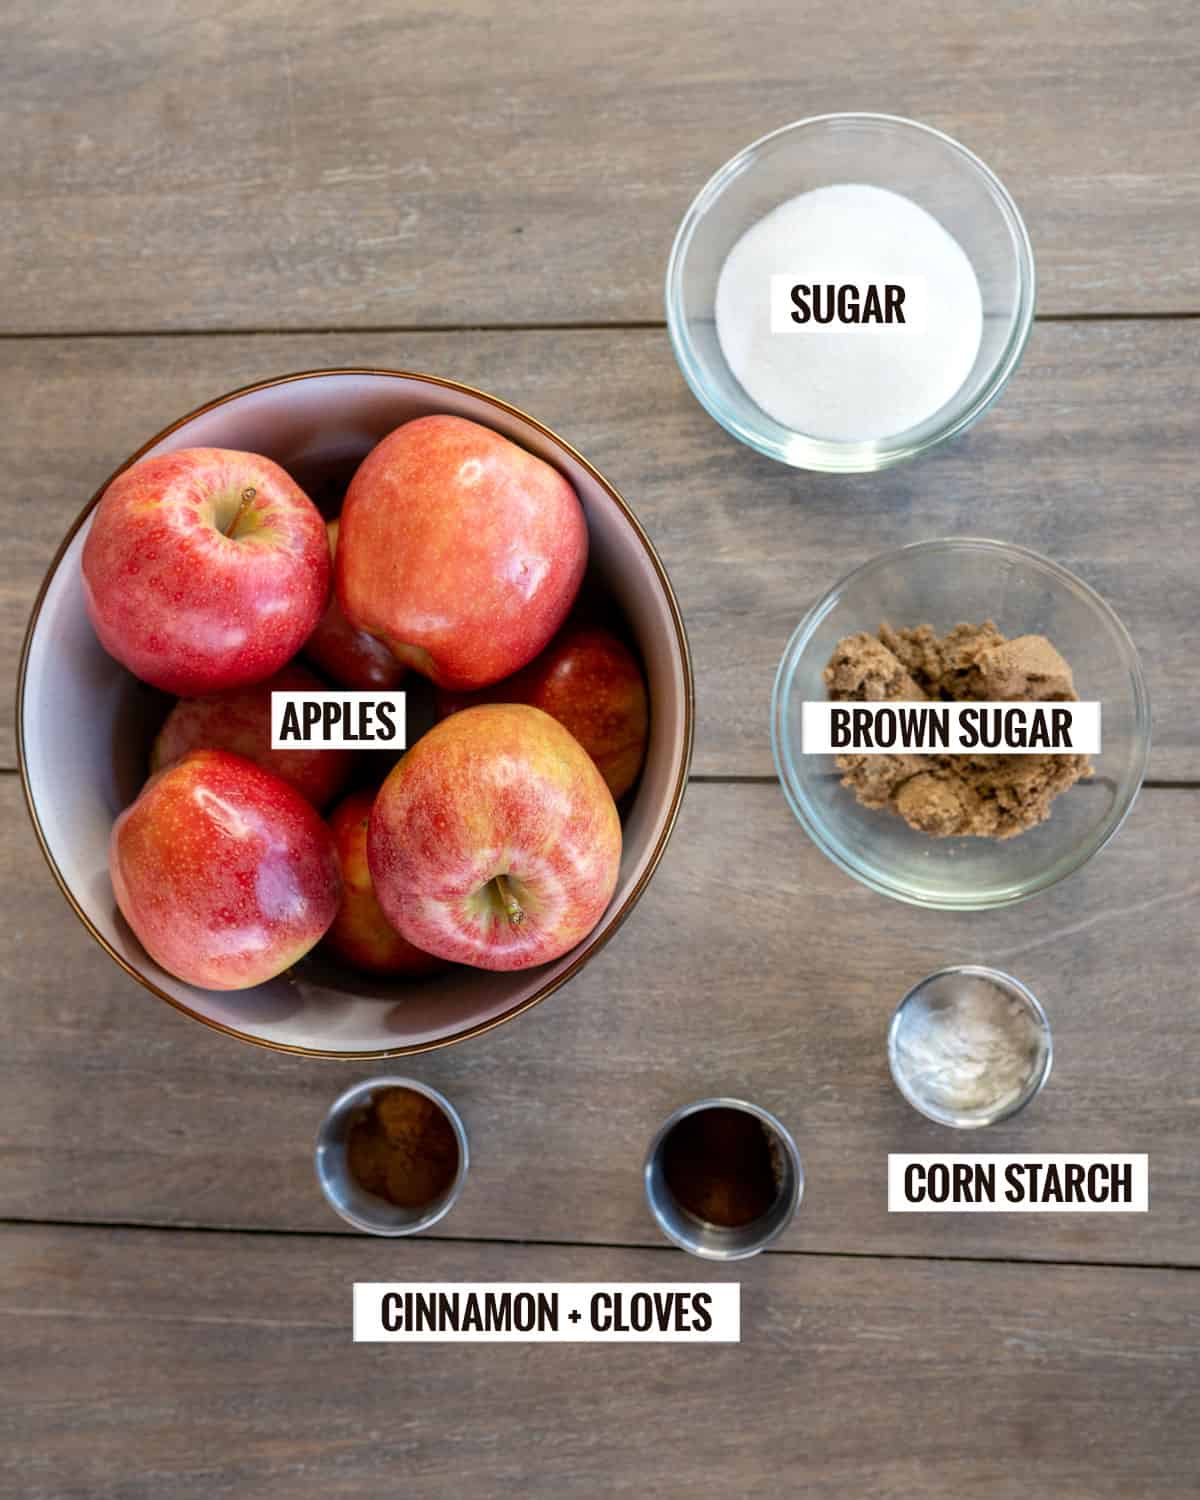 apple pie ingredients: apples, sugar, brown sugar, corn starch, cinnamon, cloves.